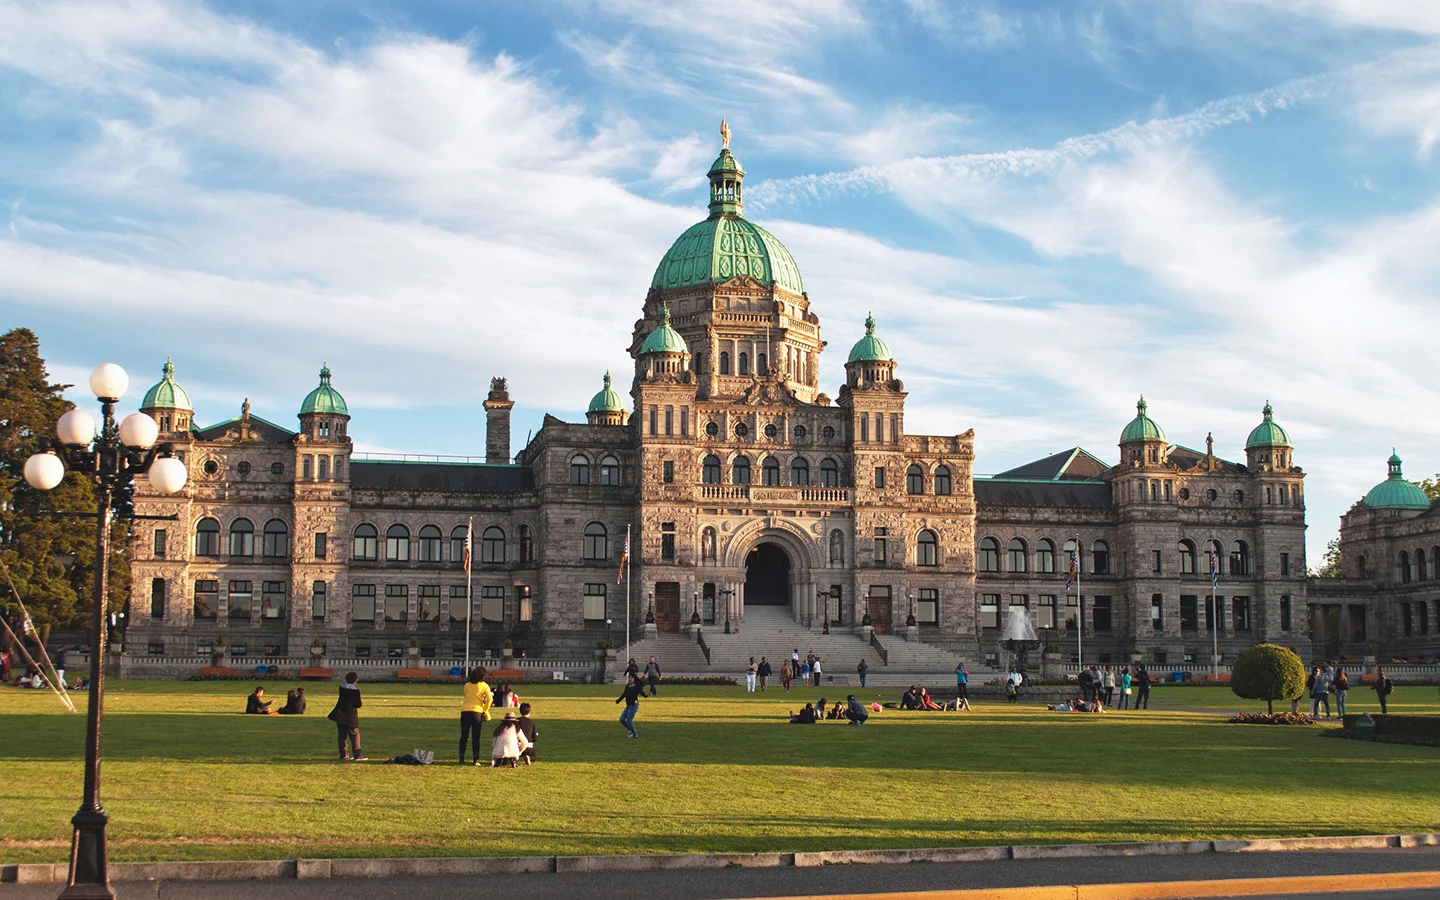 British Columbia's Legislative Building in Victoria, Canada